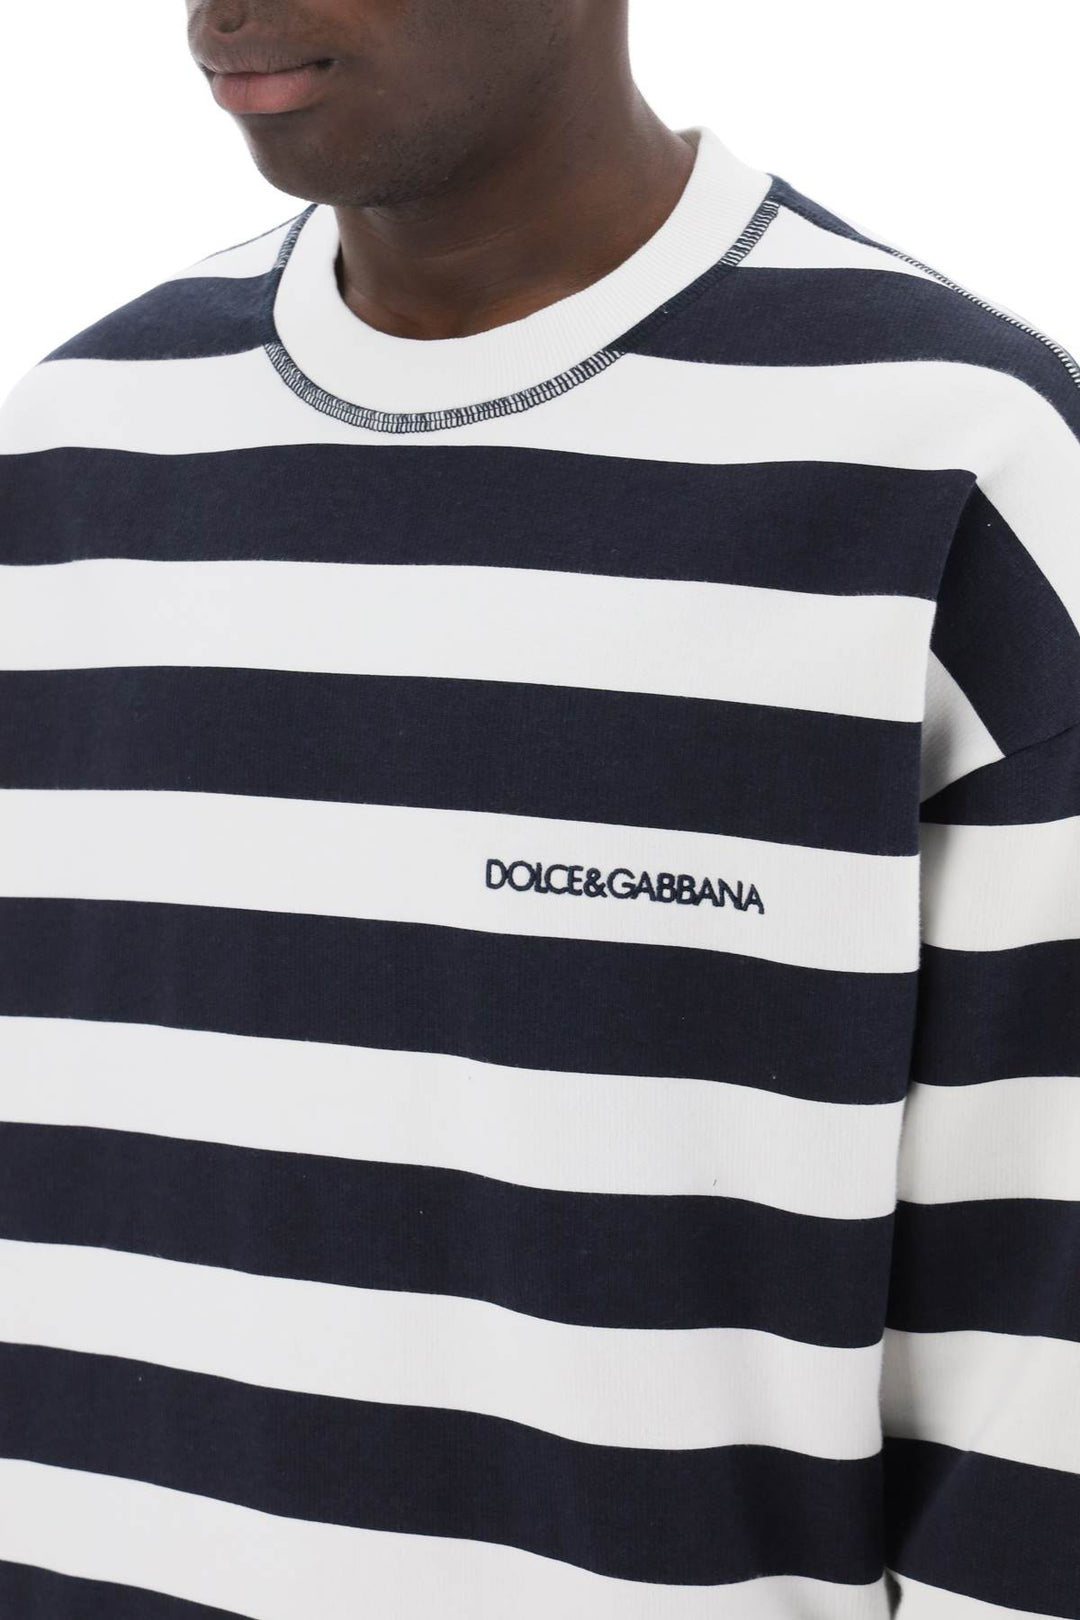 Dolce & Gabbana Striped Sweatshirt With Embroidered Logo   Bianco